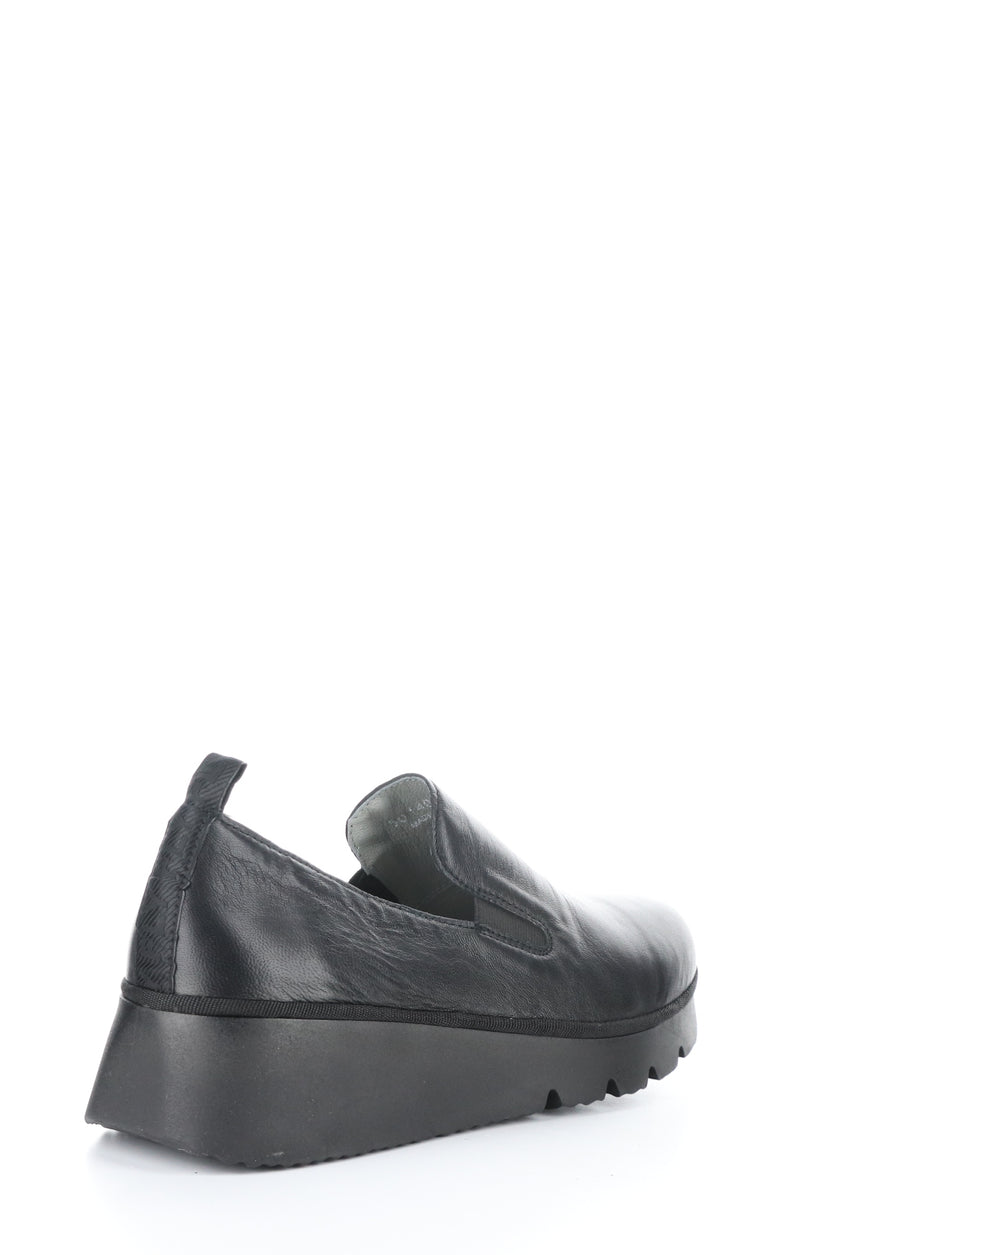 PECE406FLY 000 BLACK Slip-on Shoes